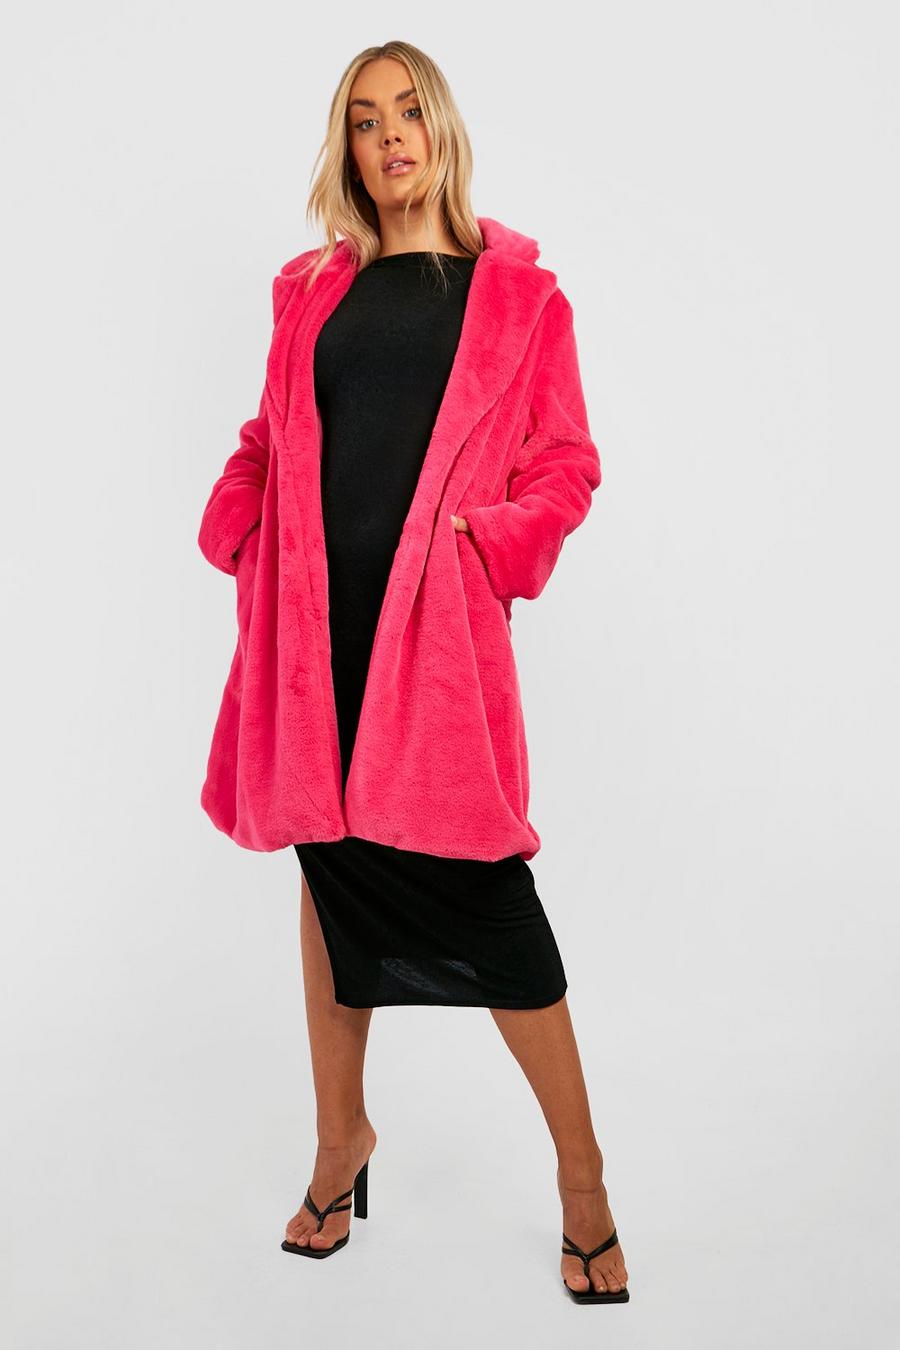 Grande taille - Manteau long en fausse fourrure, Hot pink image number 1